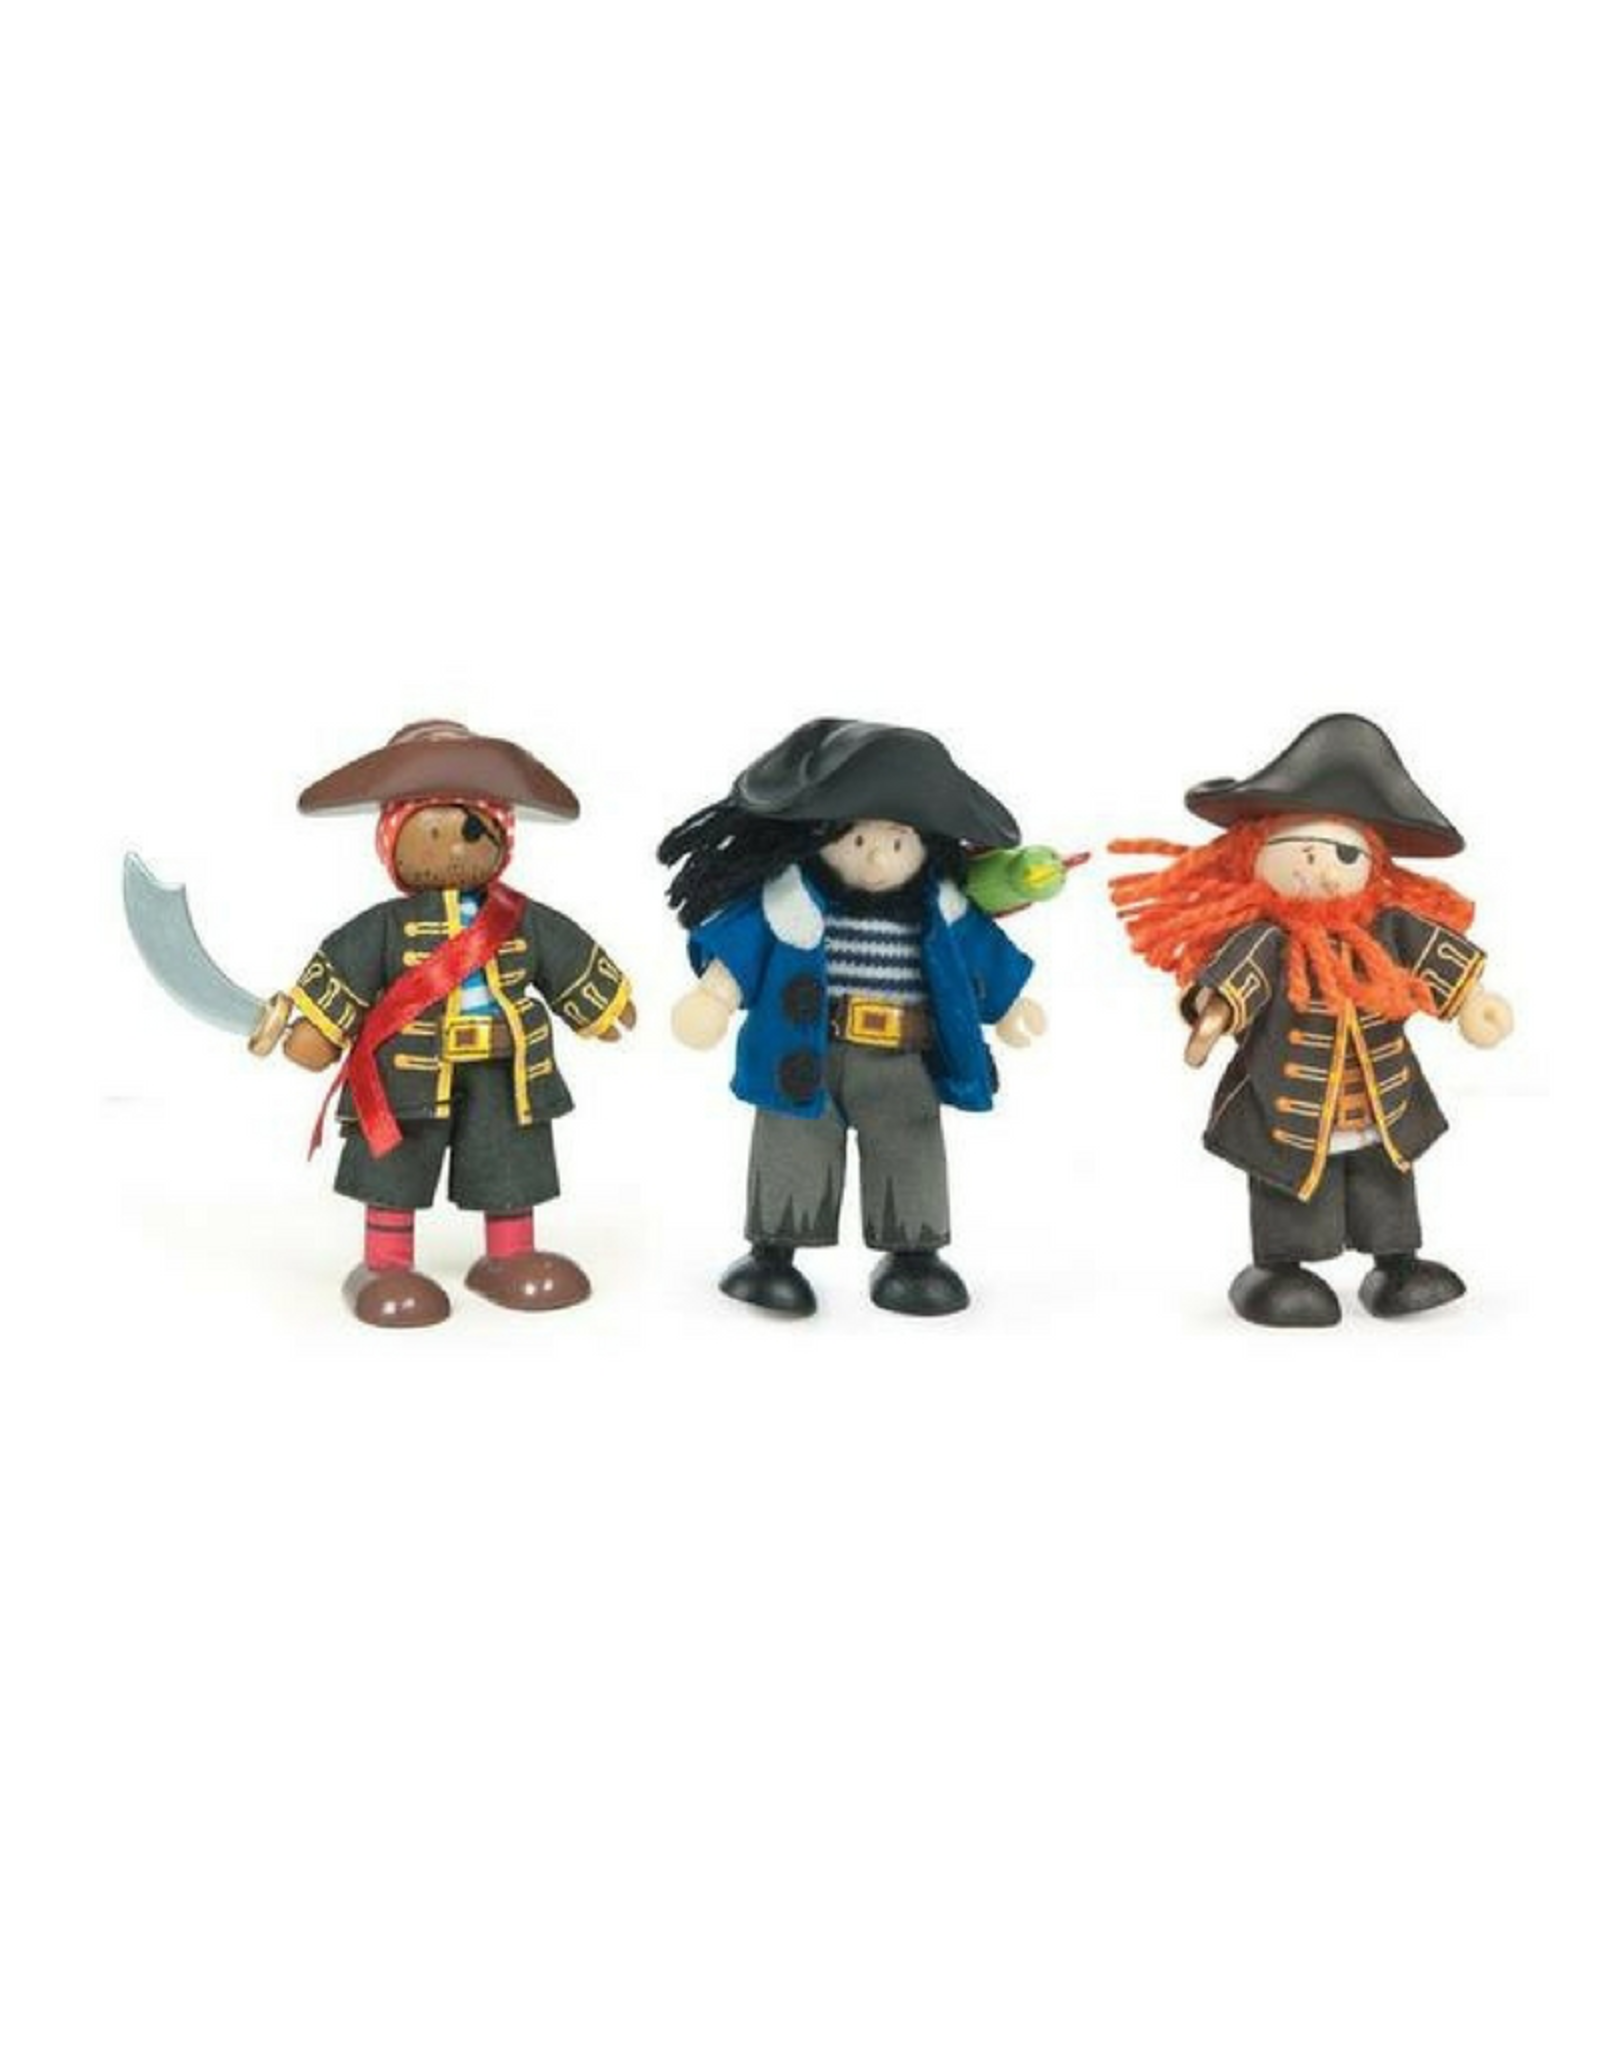 budkins pirates